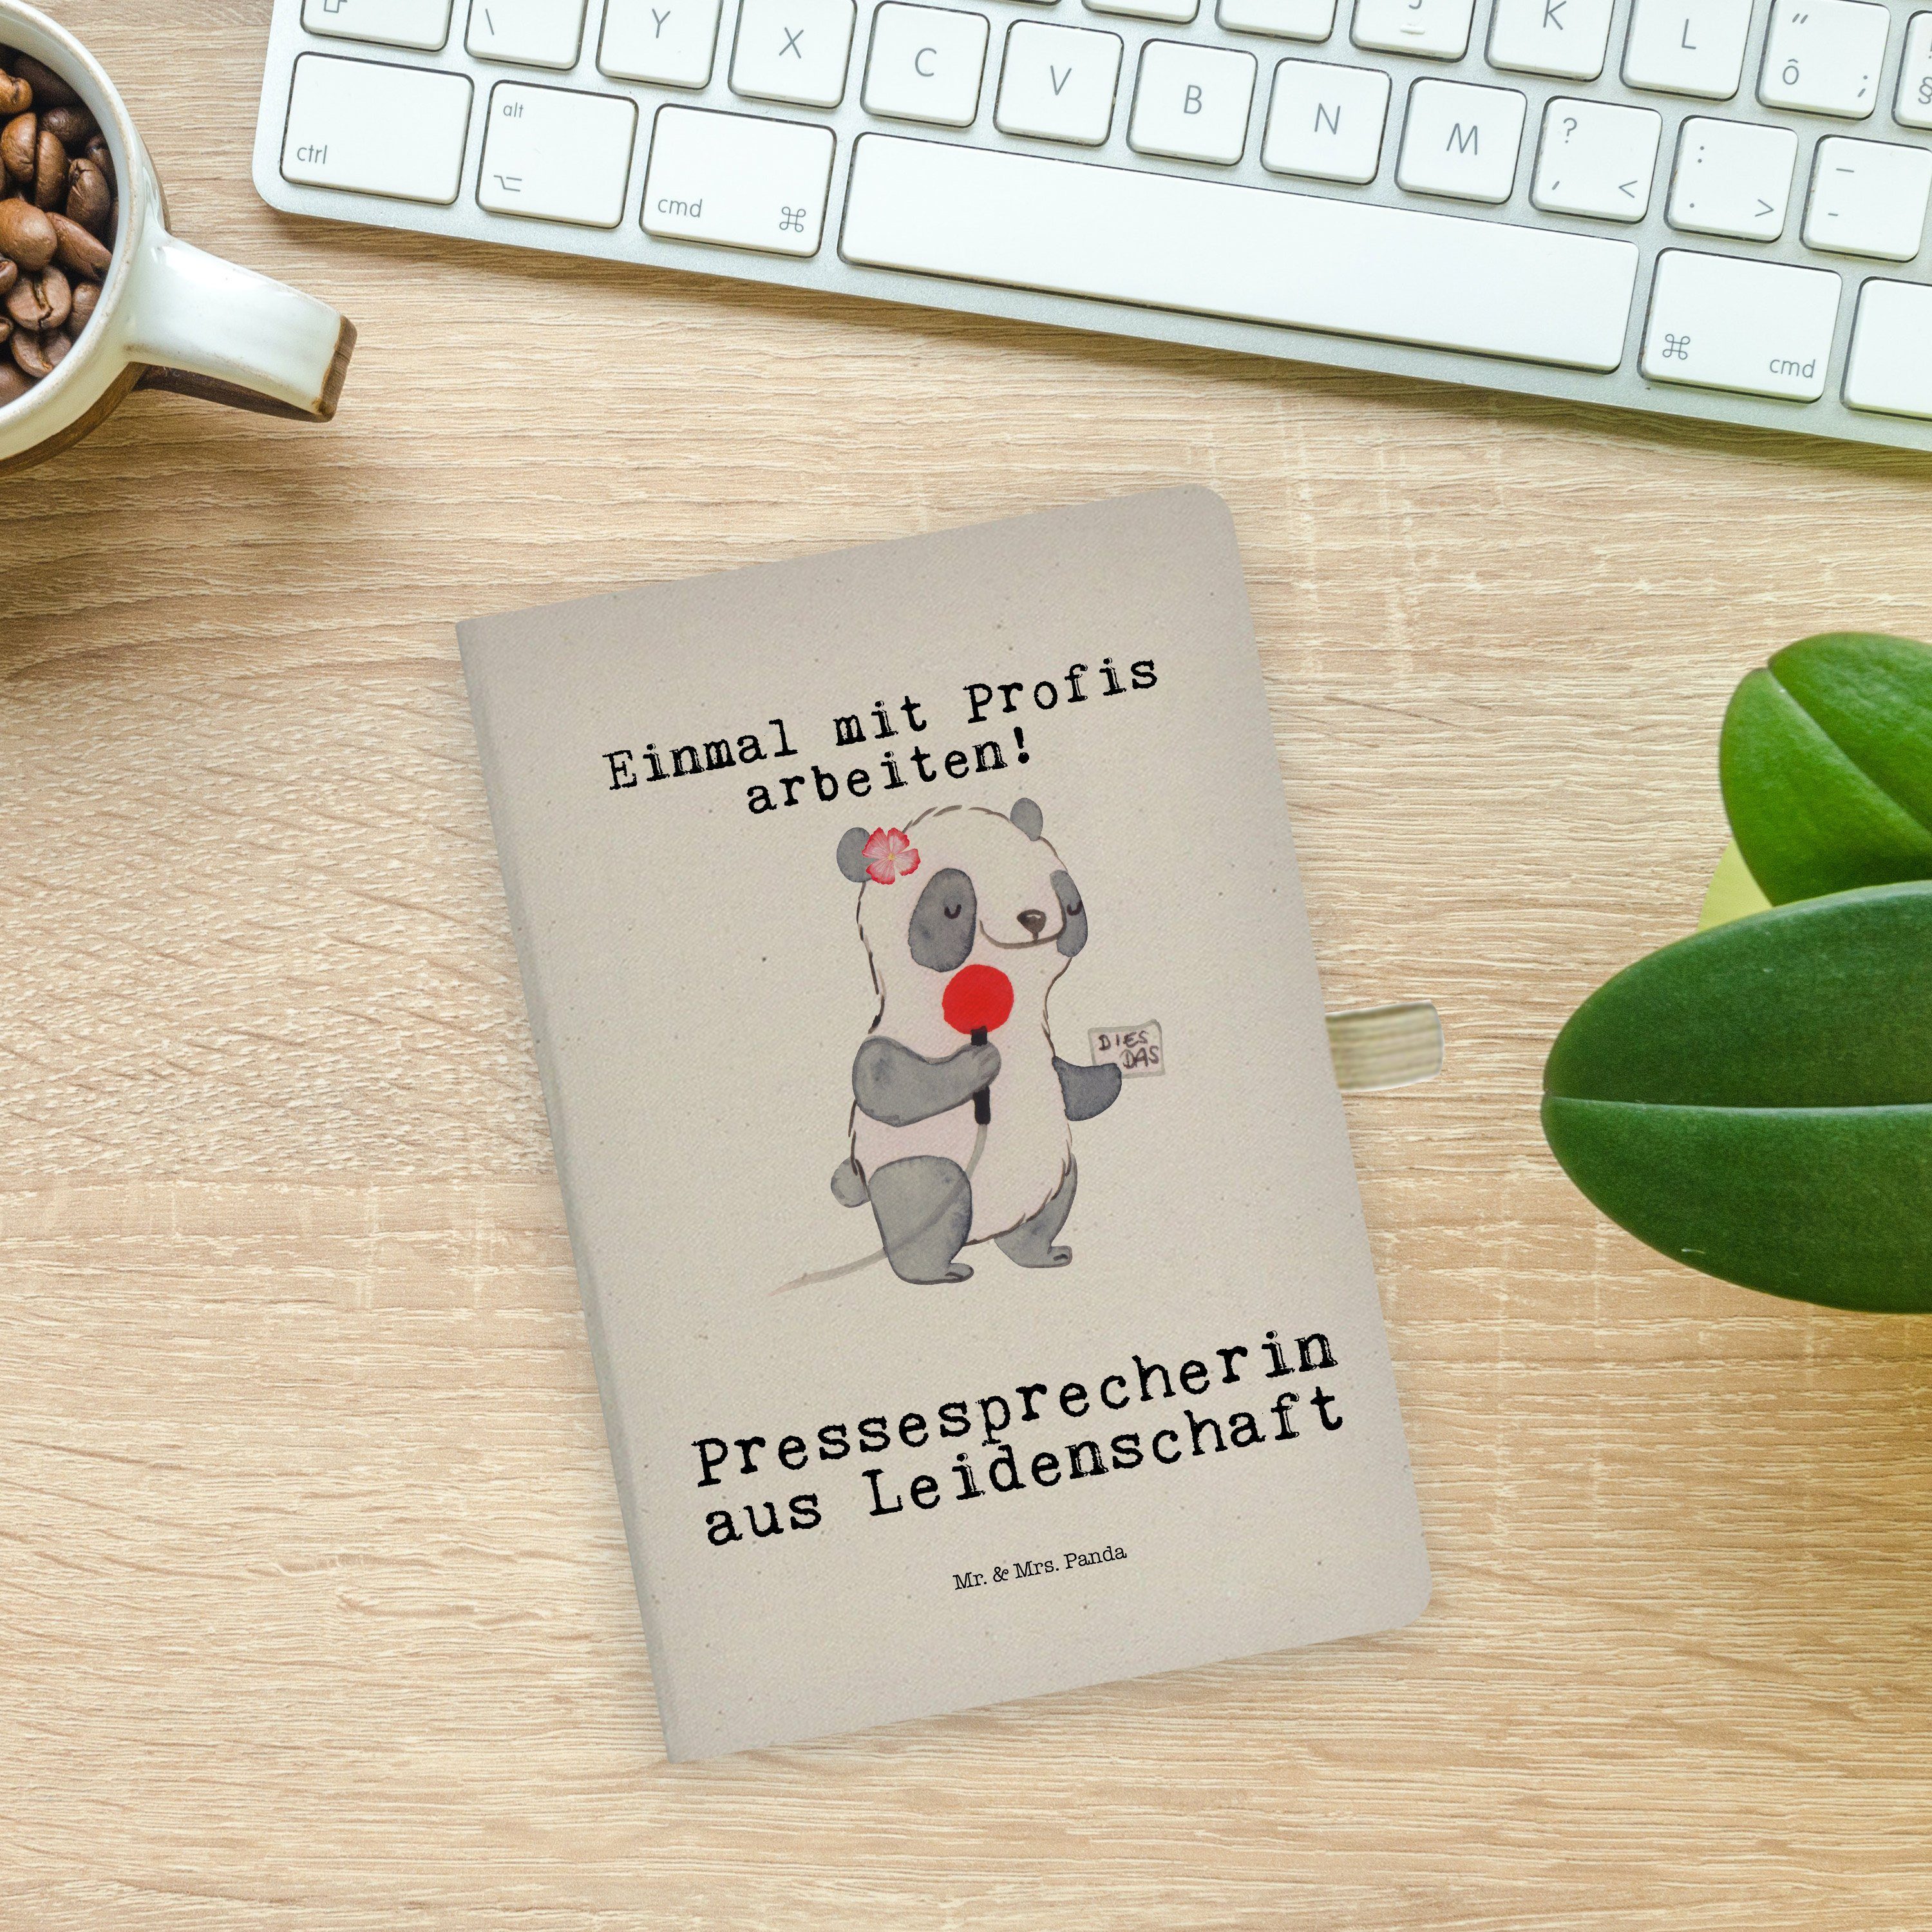 aus Mr. Mrs. Mr. Geschenk, Panda - Leidenschaft & Pressesprecherin & Panda Mrs. Transparent Eintrageb - Notizbuch